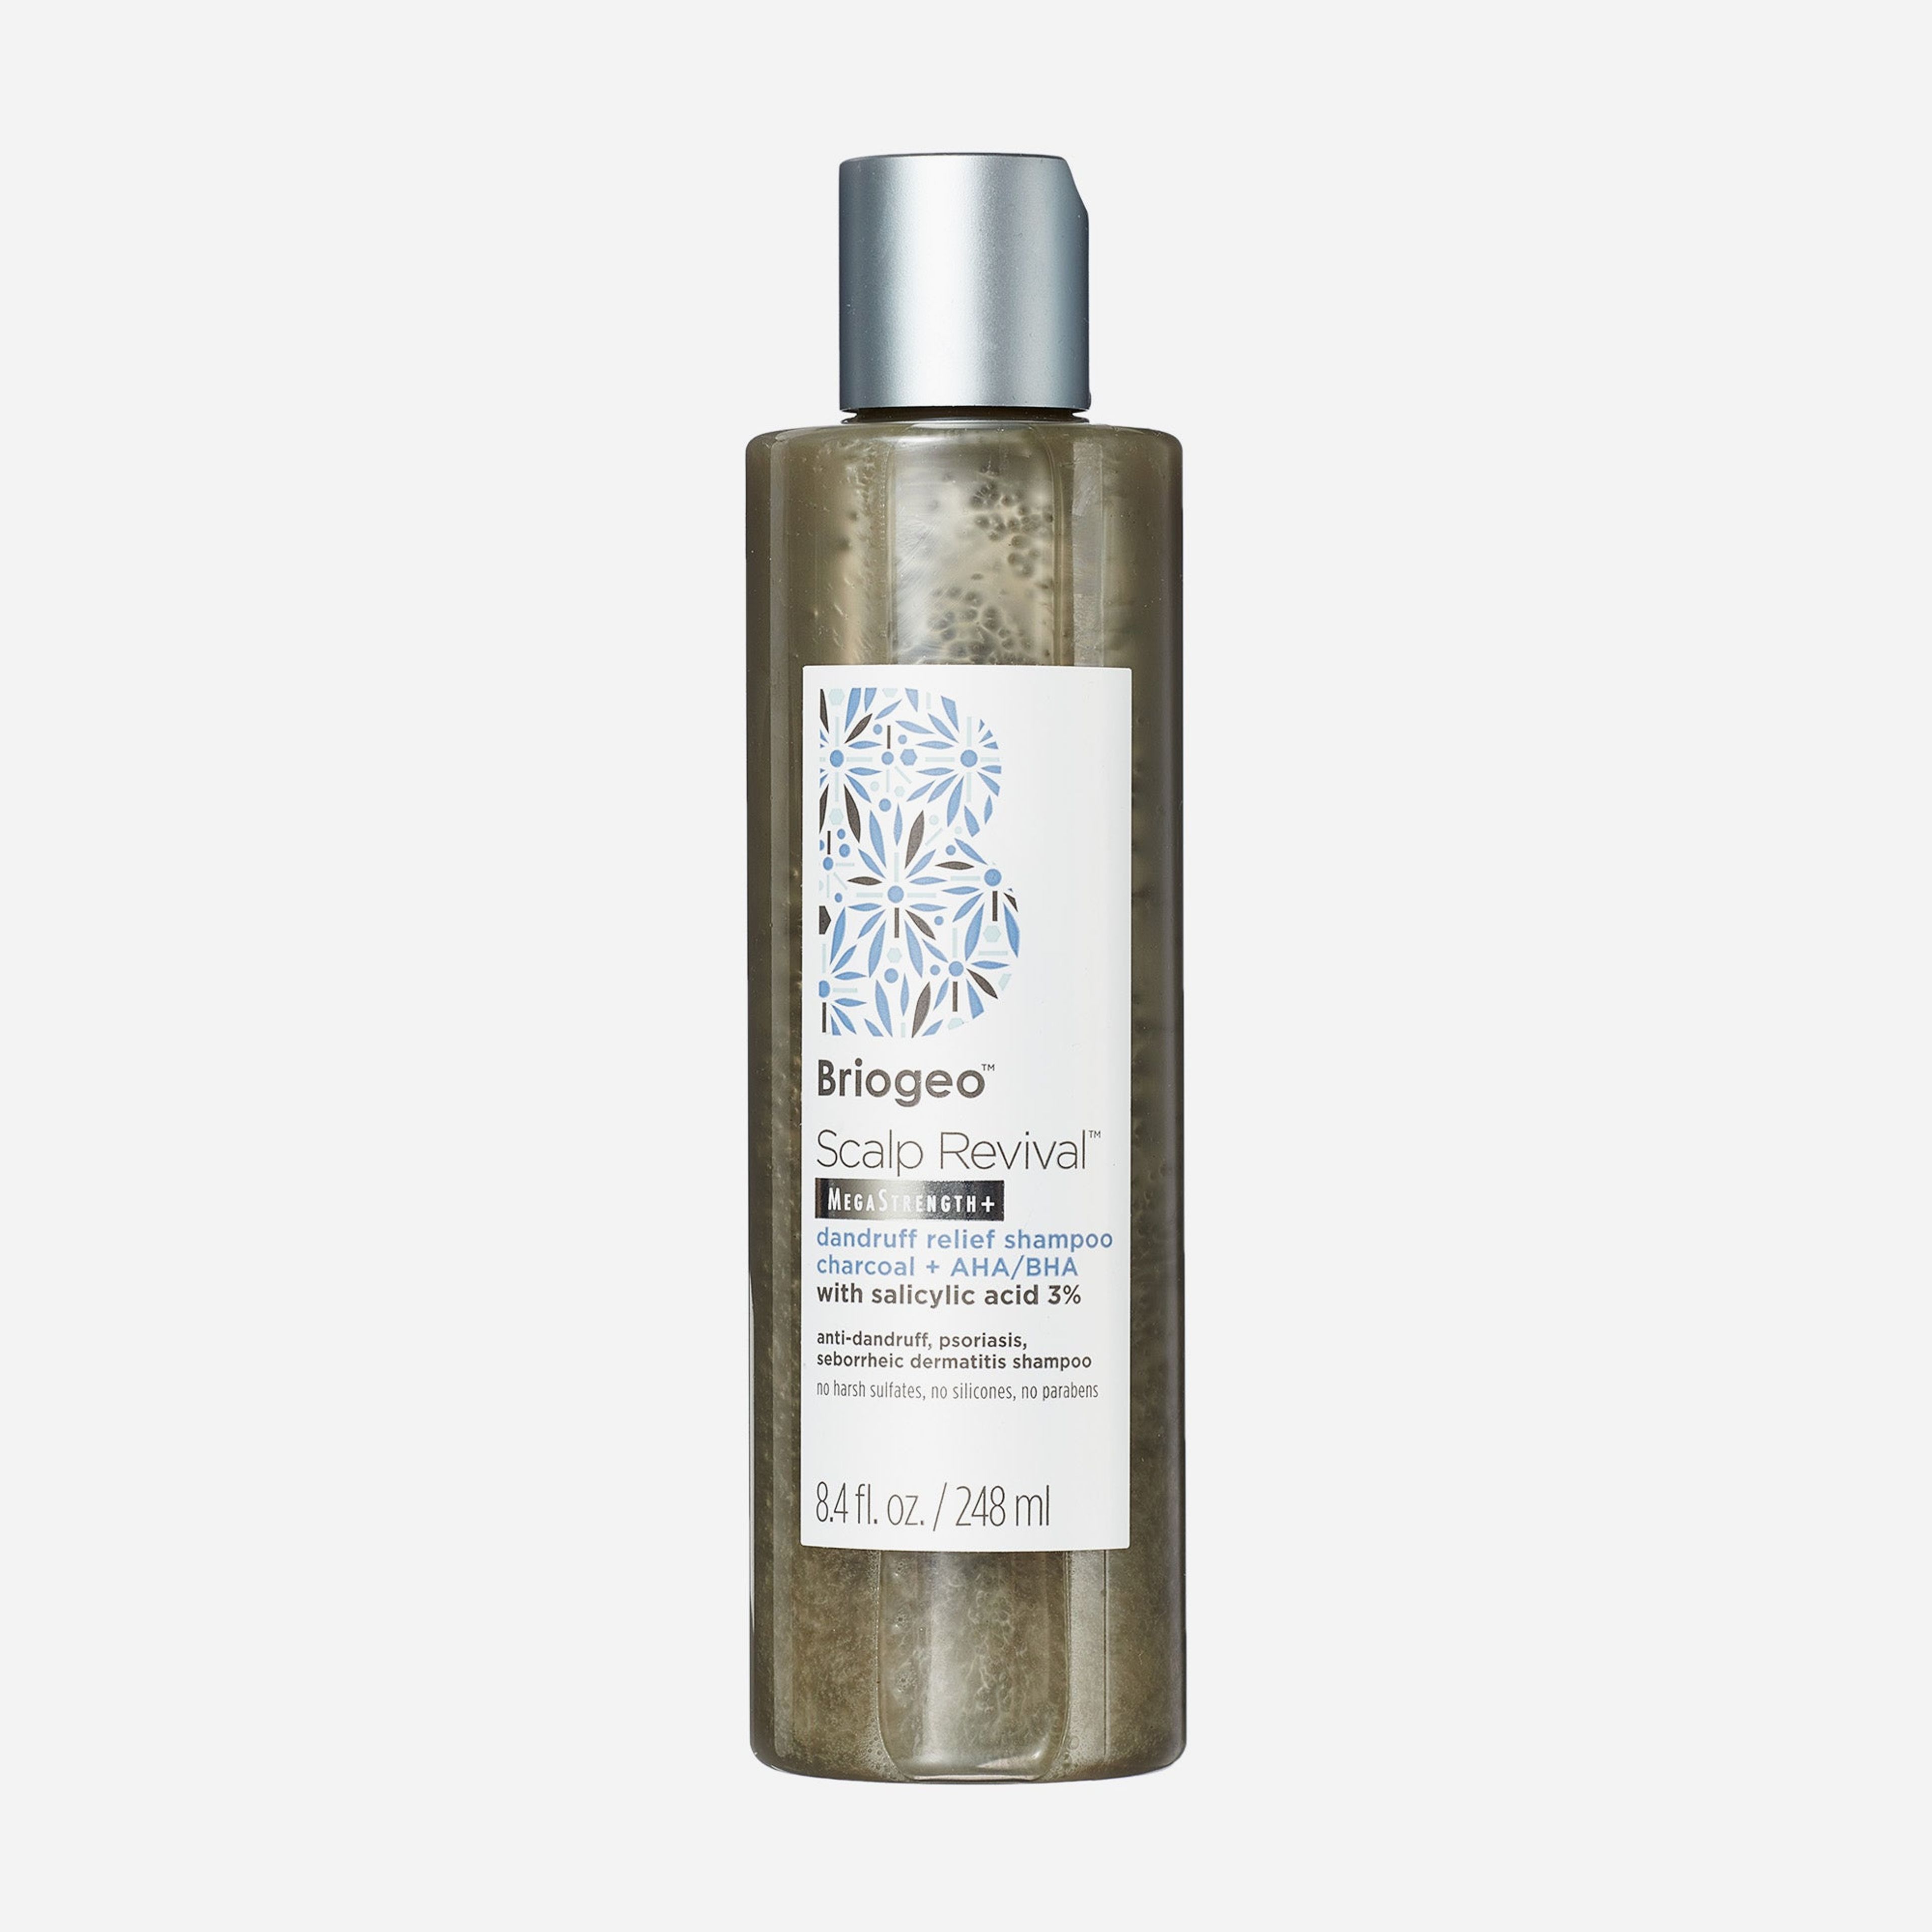 Scalp Revival MegaStrength+ Dandruff Relief Shampoo Charcoal + AHA/BHA with Salicylic Acid 3%